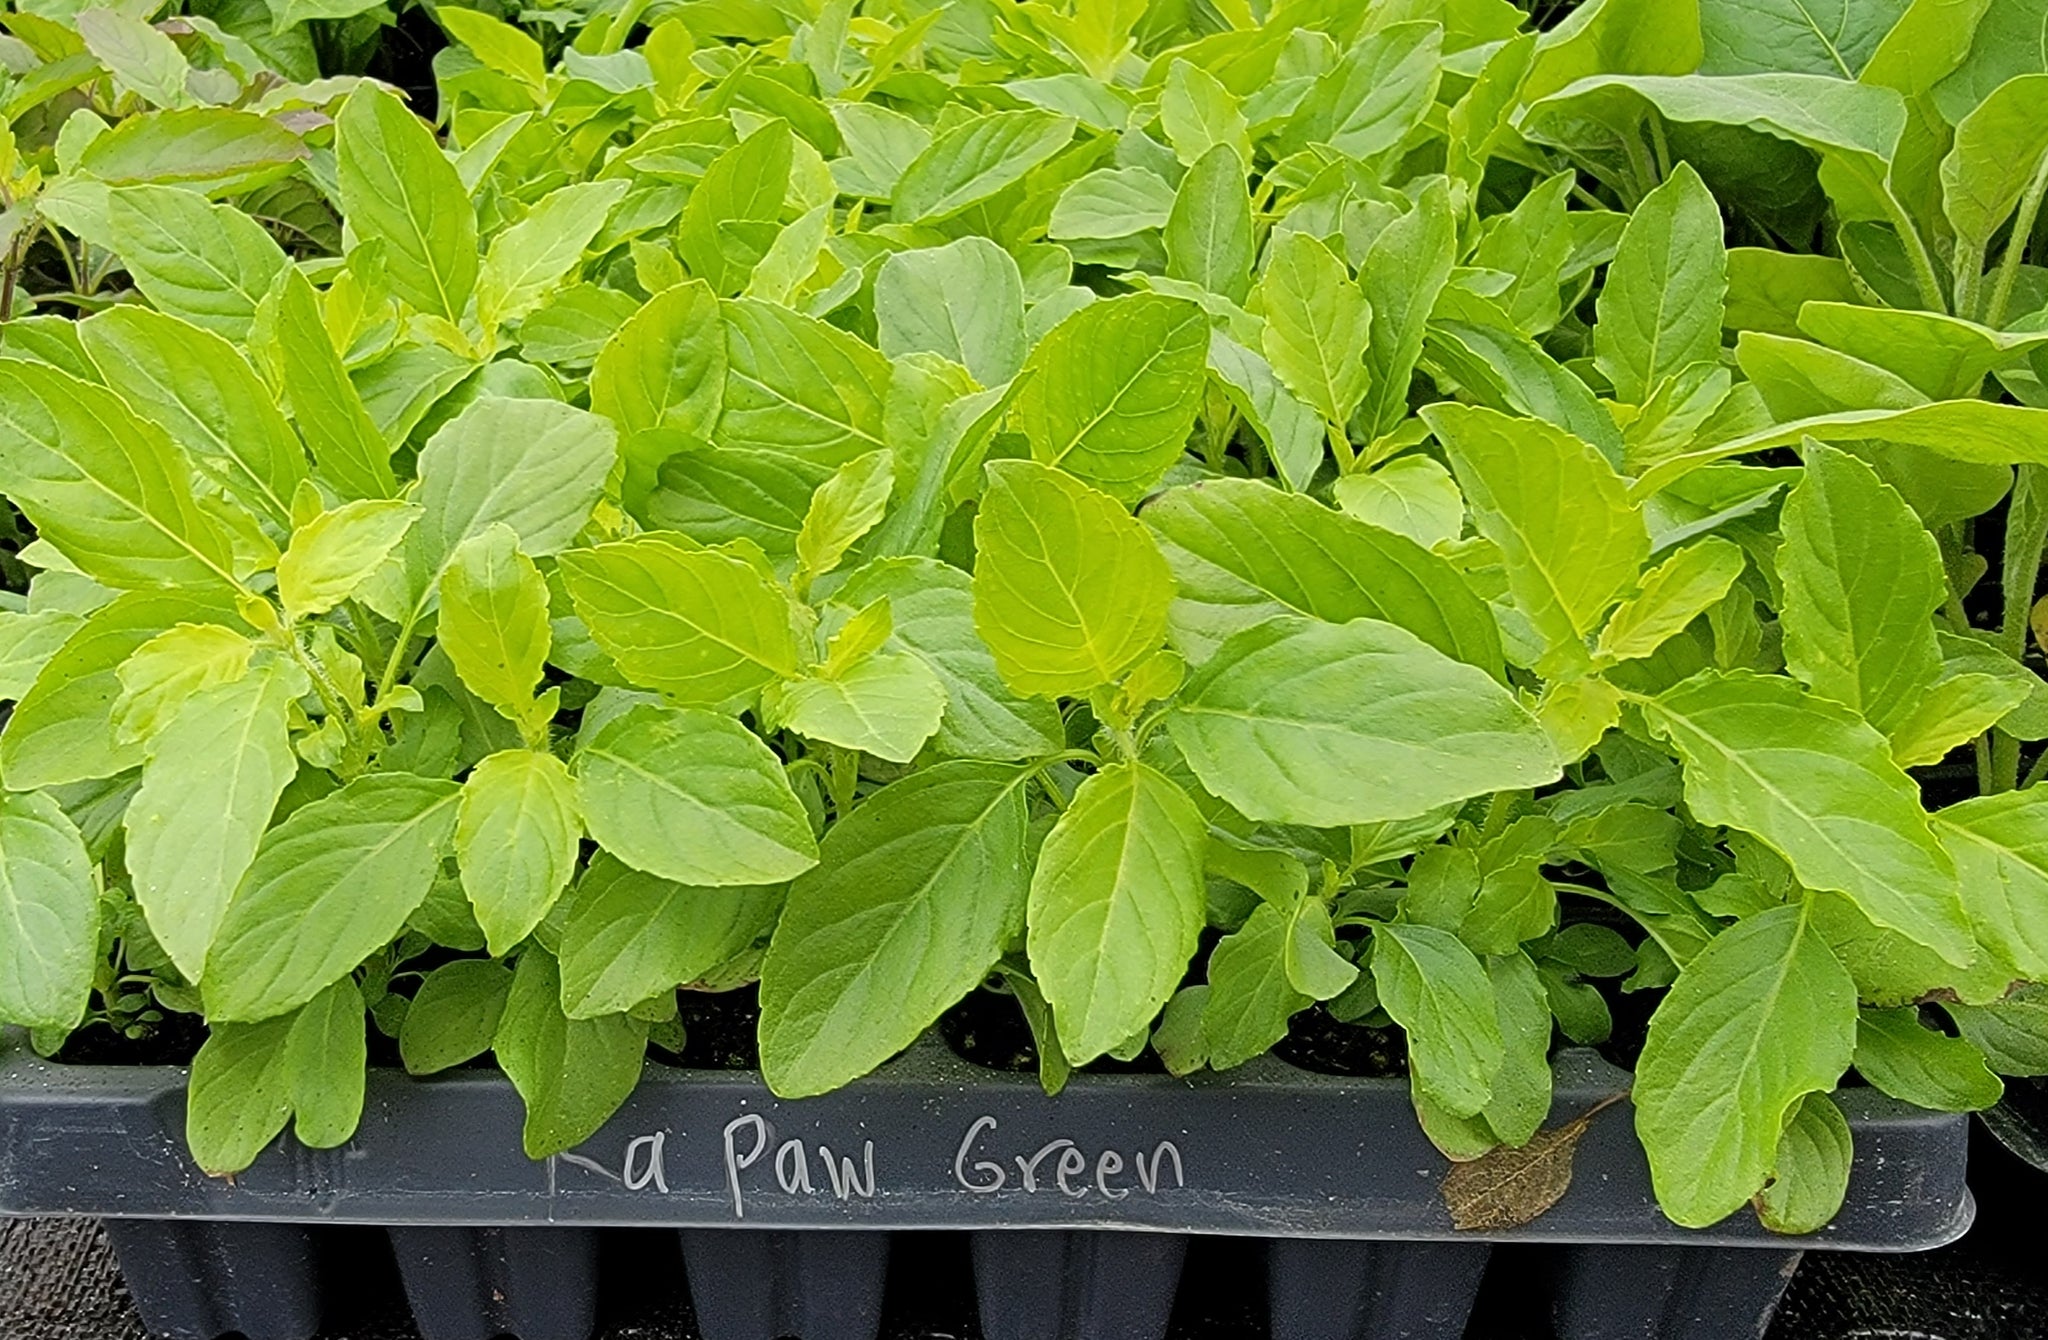 Green Thai Holy Basil Kras Pao Pakapao Herb Live Plants- 4 Seedlings